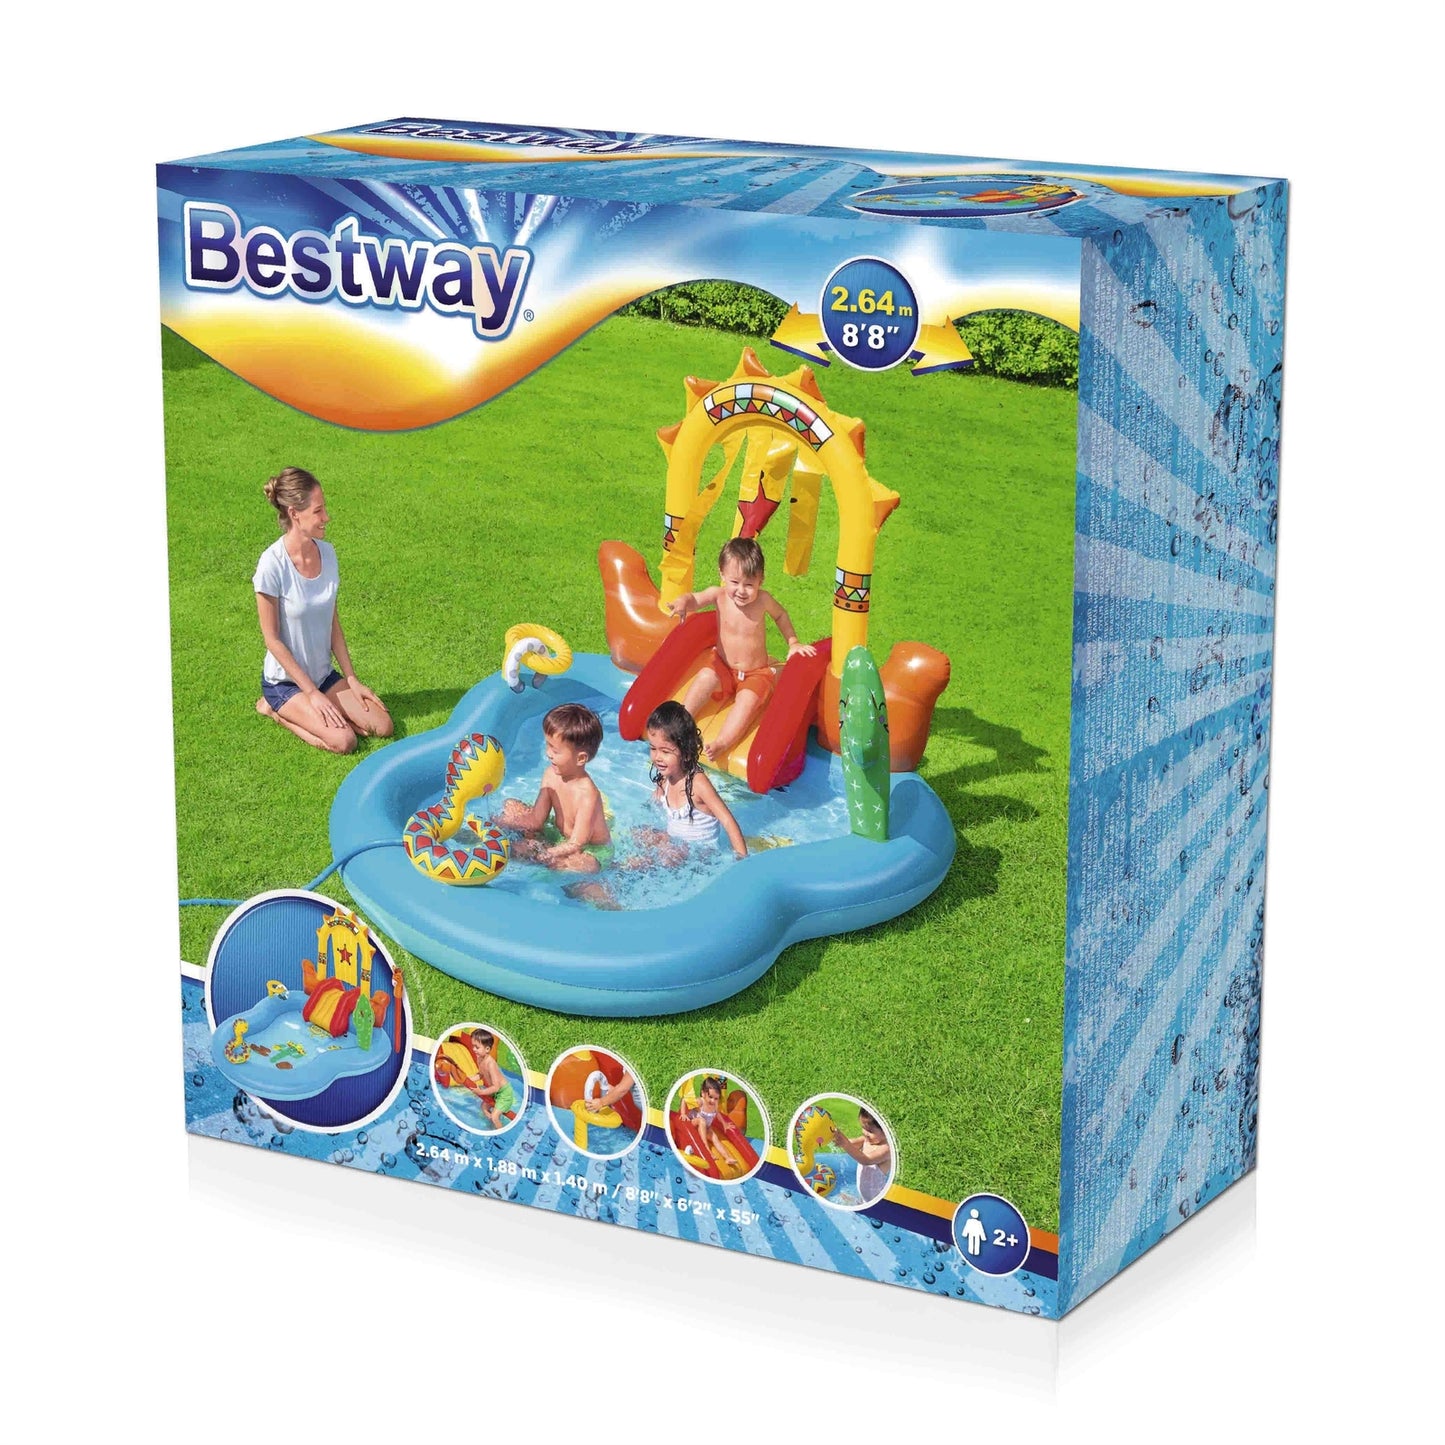 Bestway Wild West Kids Play Inflatable Pools Above Ground Swimming Pool